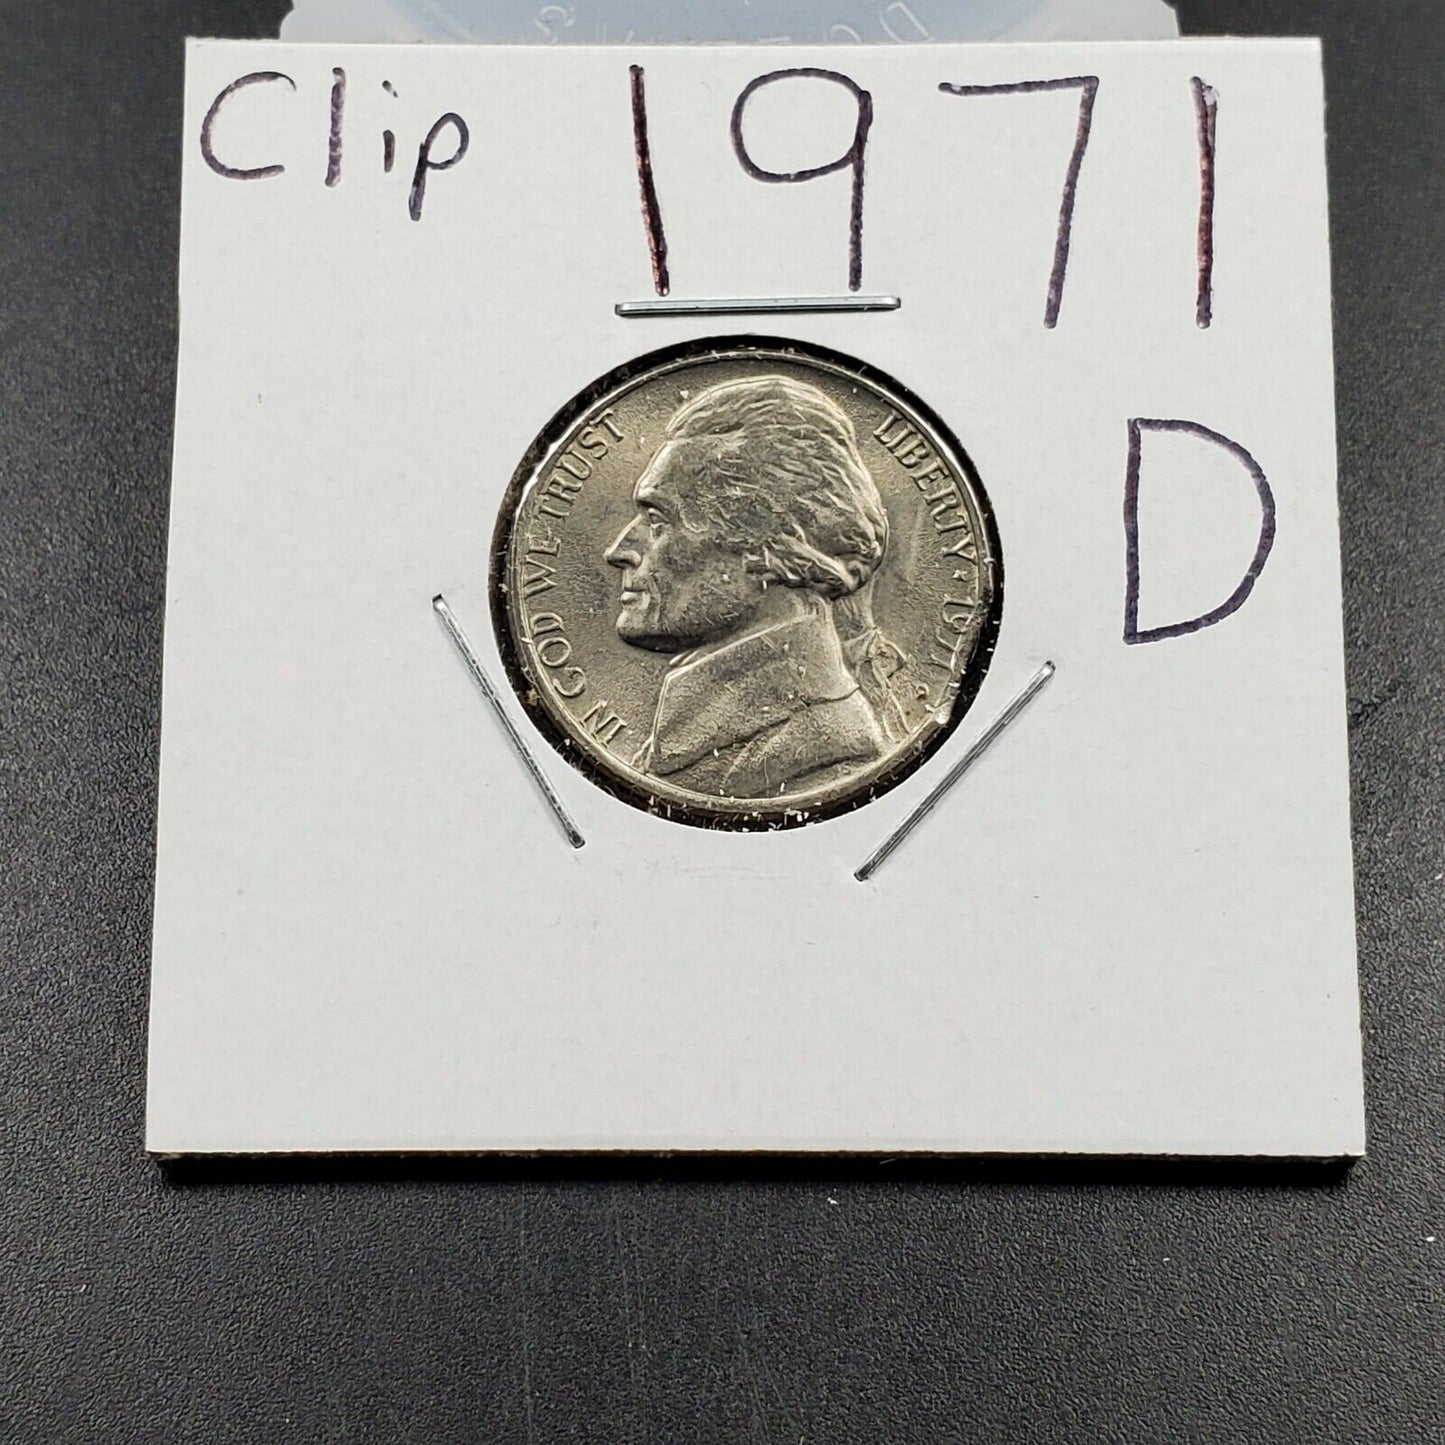 1971 D 5c Jefferson Clad Nickel Coin GEM BU FS Full Steps Clipped Planchet Error